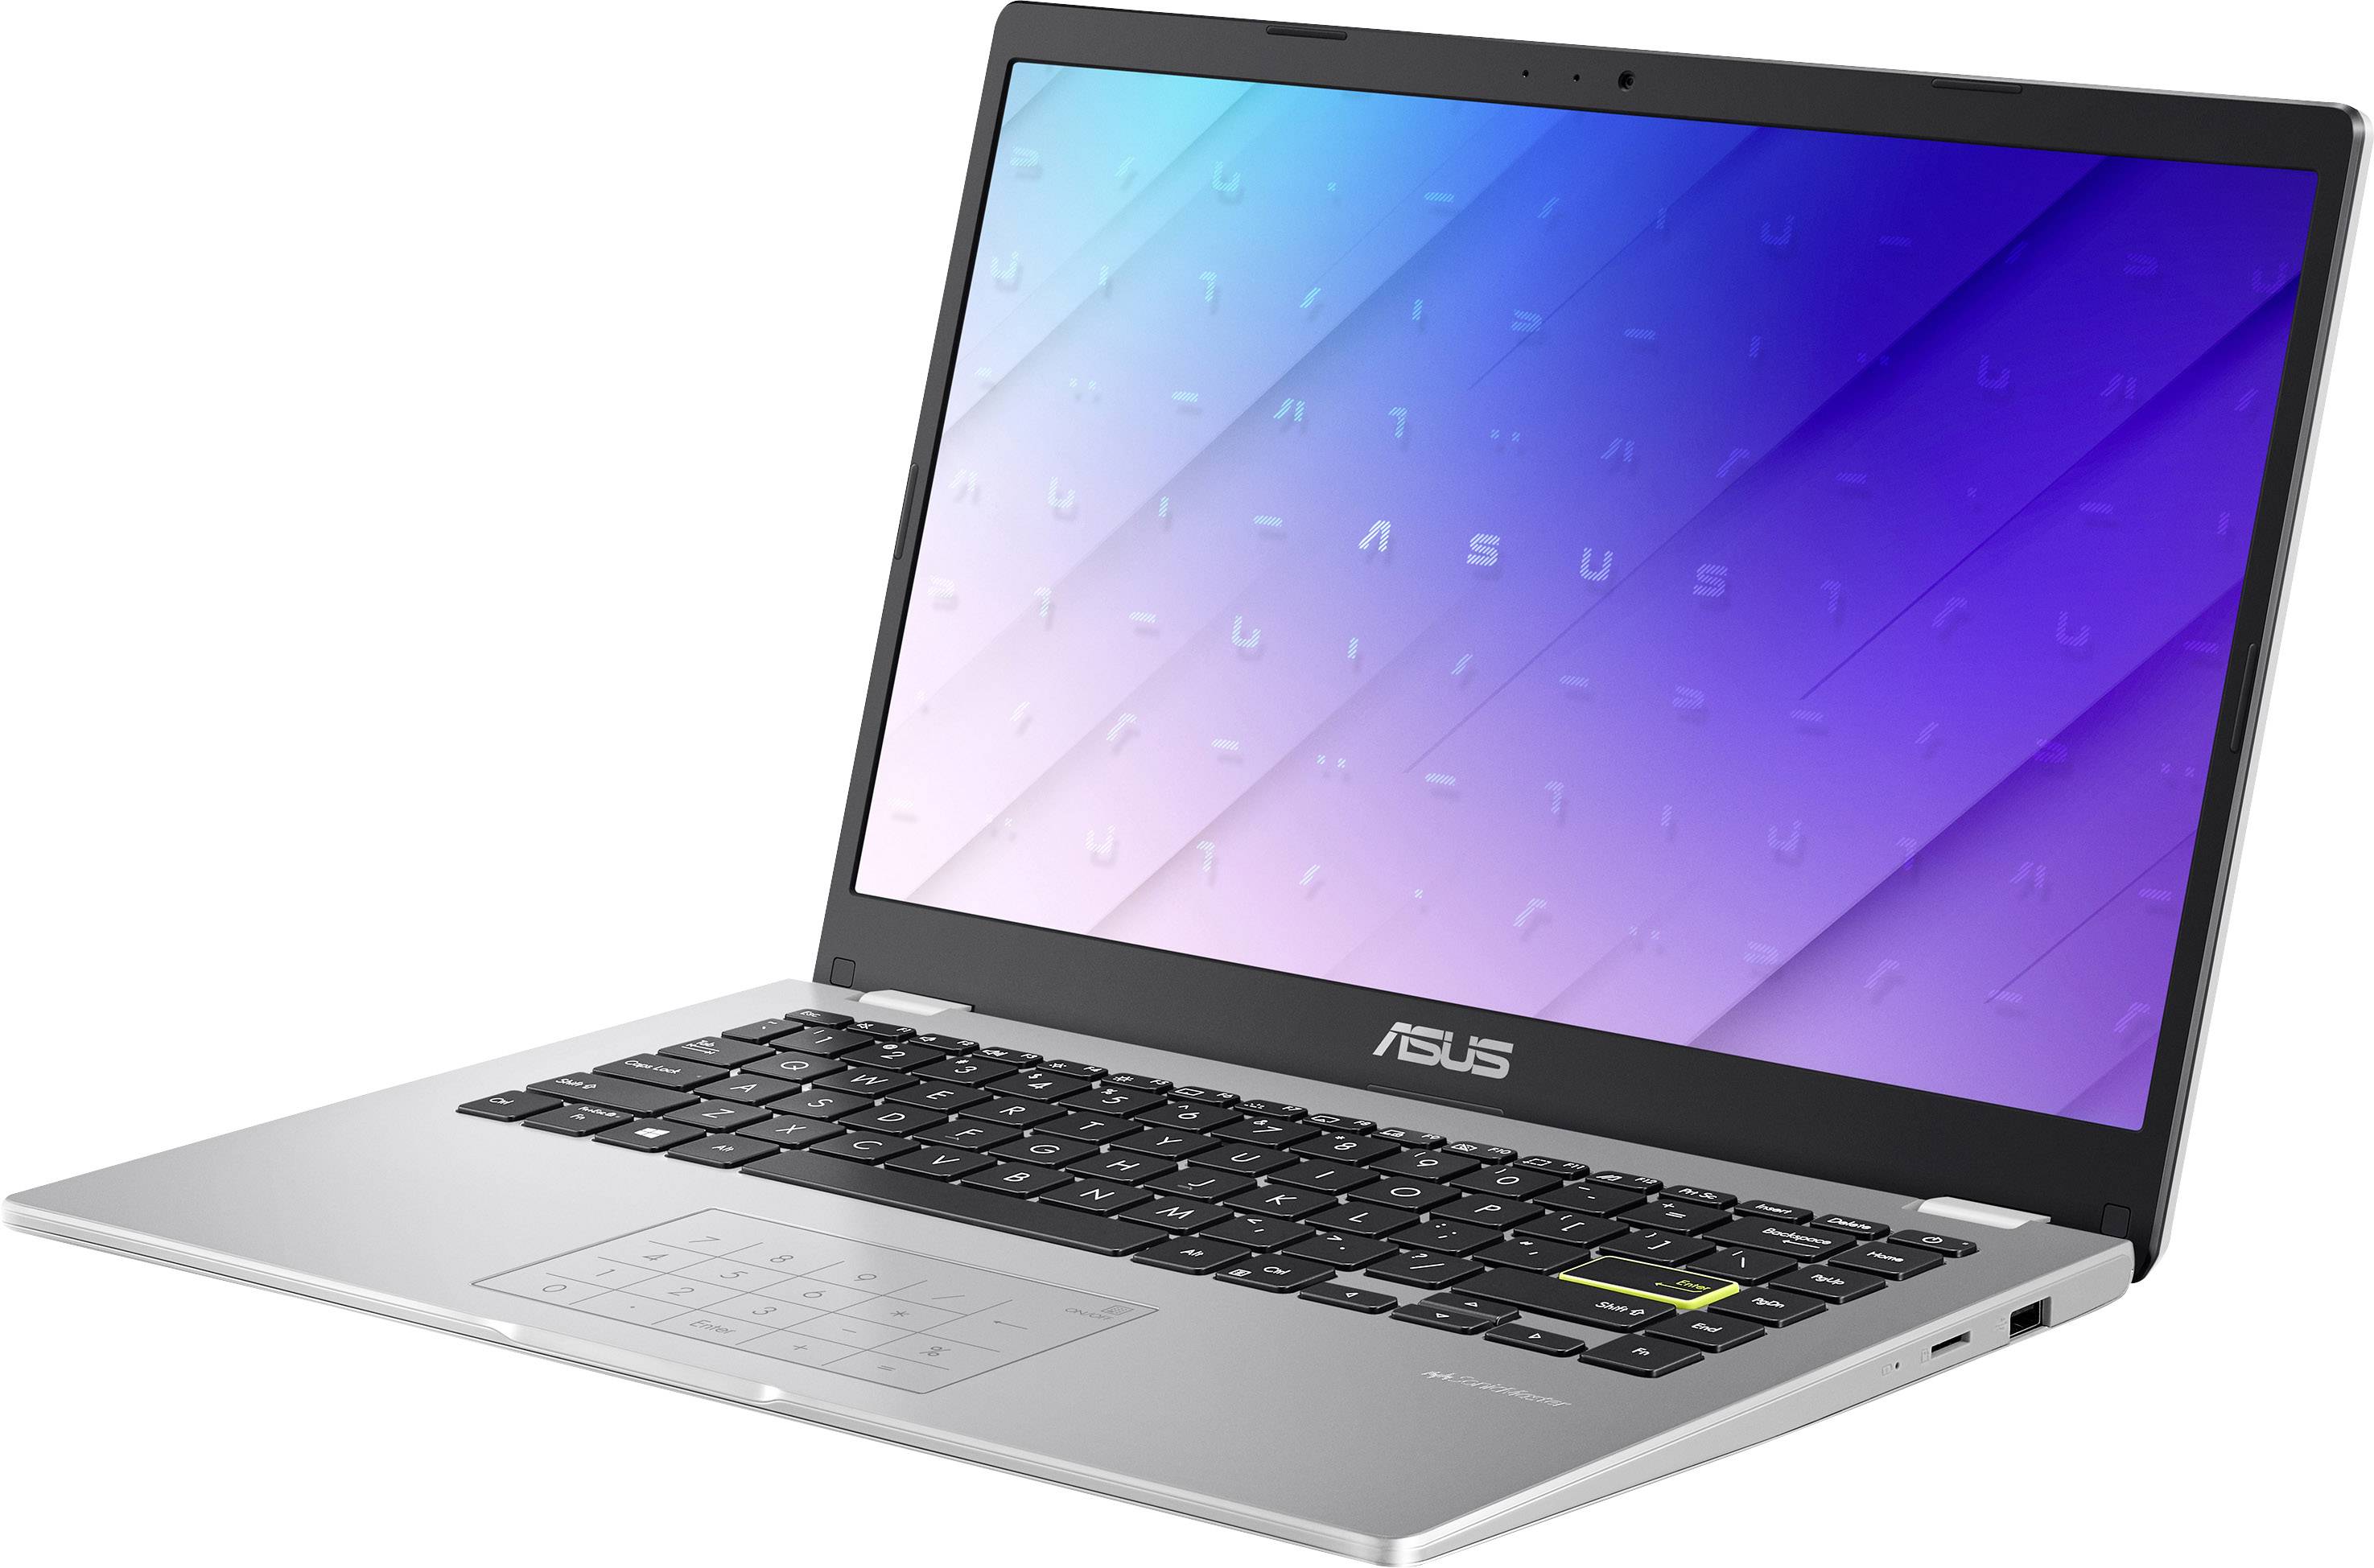 Asus Vivobook 14 E410ma 356 Cm 14 Inch Full Hd Laptop Intel® Pentium® Silver N5030 8 Gb Ram 6520